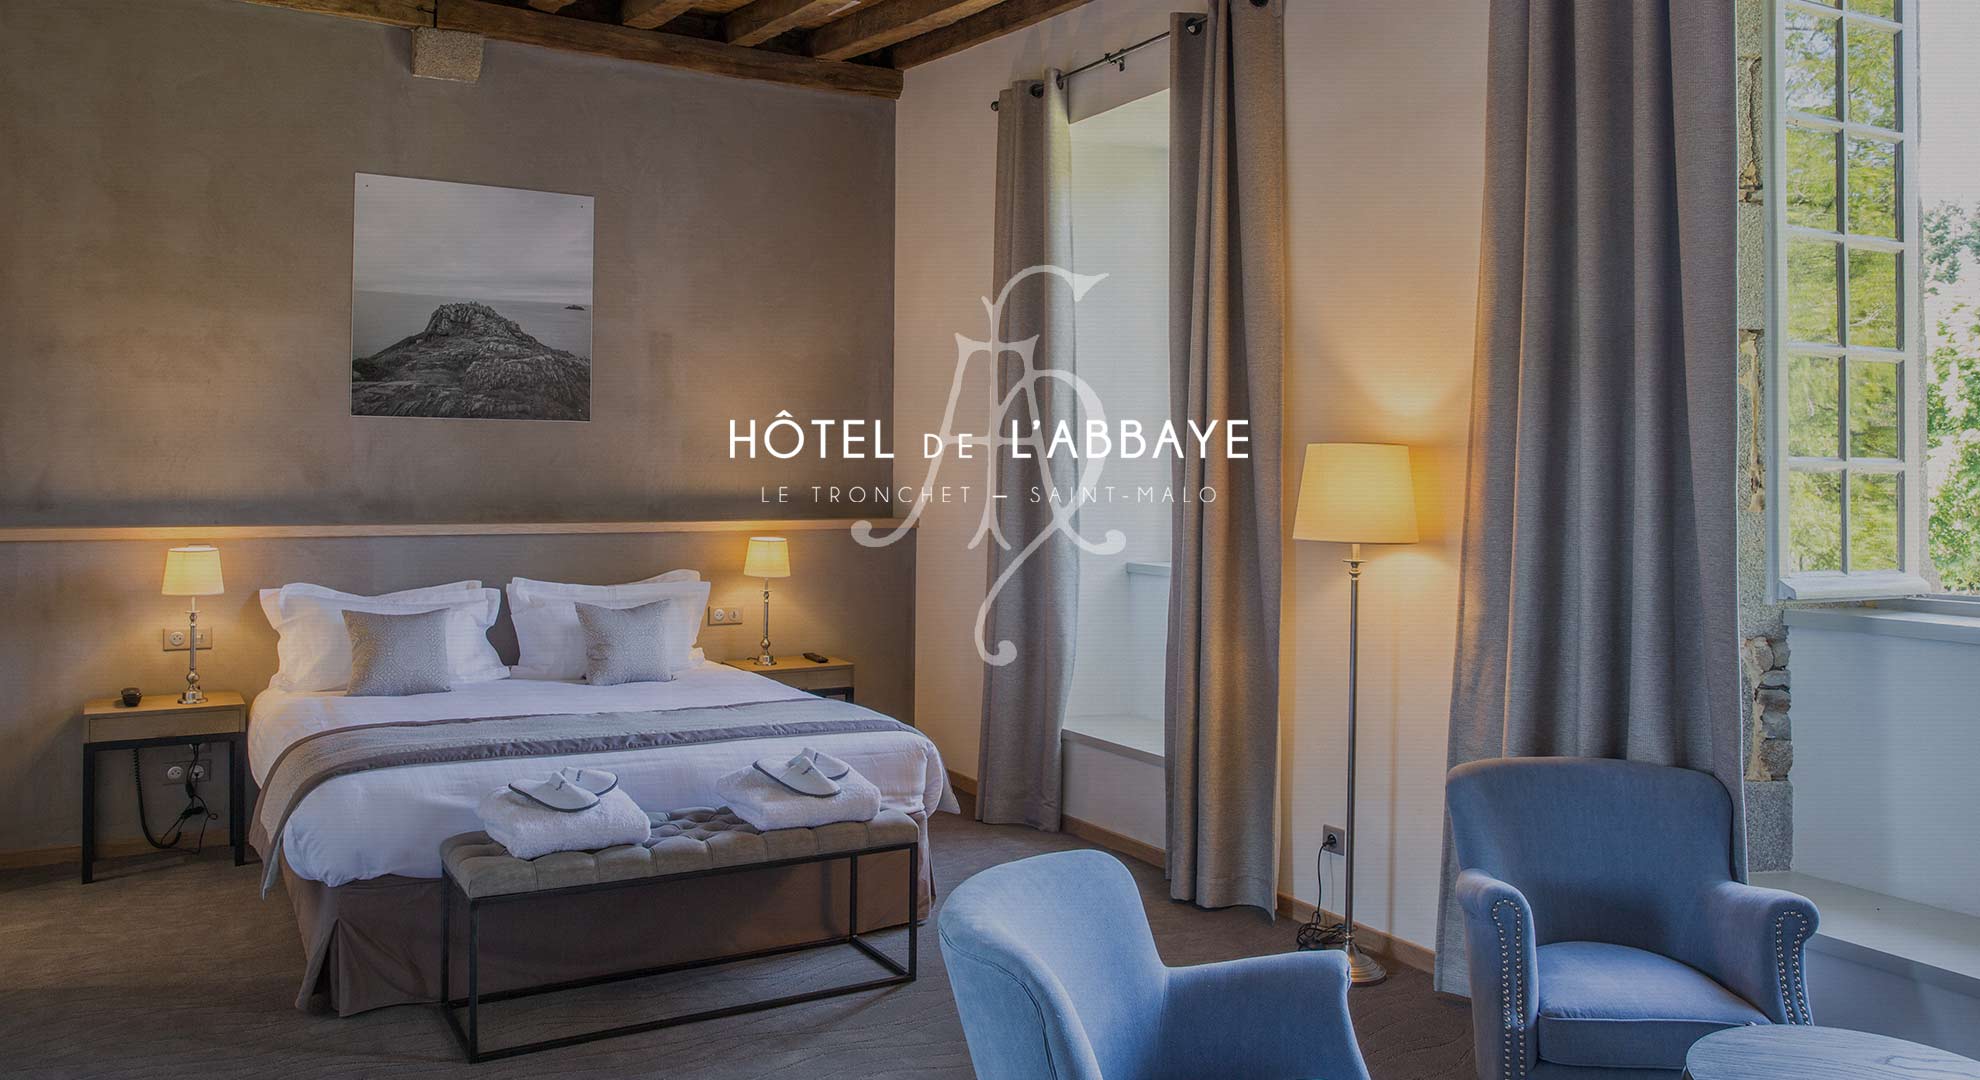 (c) Hotel-de-labbaye.fr